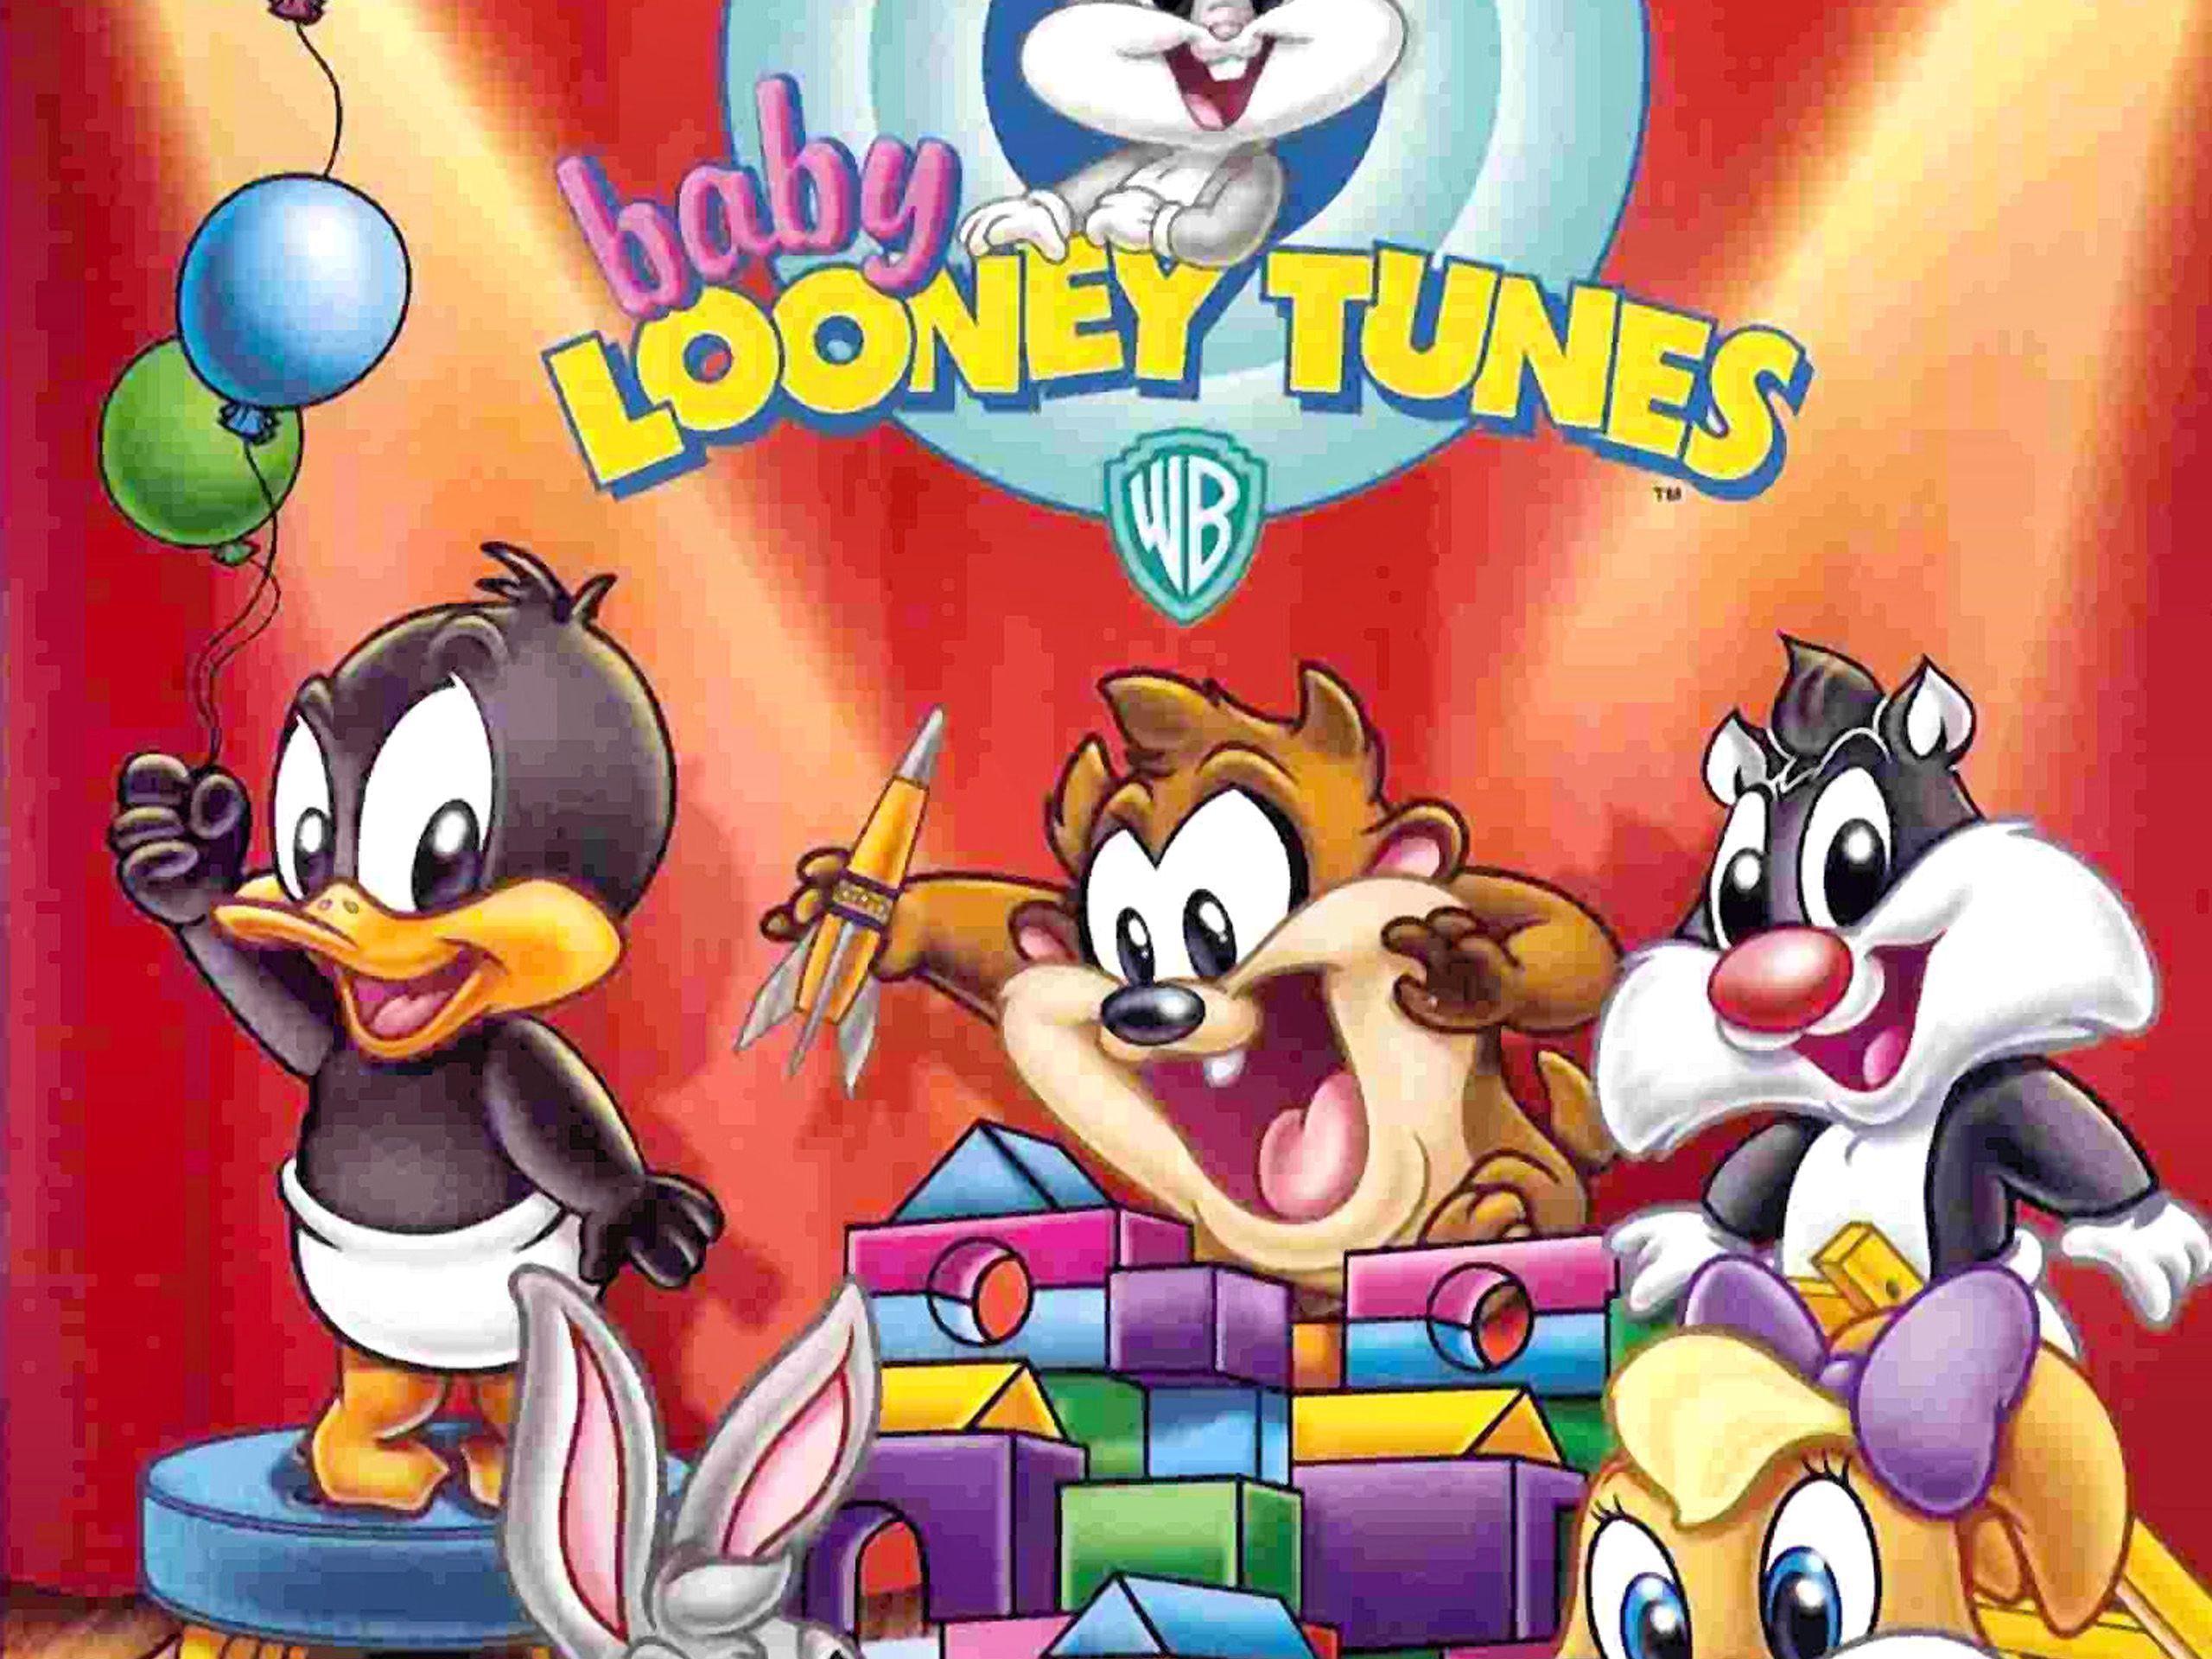 3 Baby Looney Tunes Wallpapers